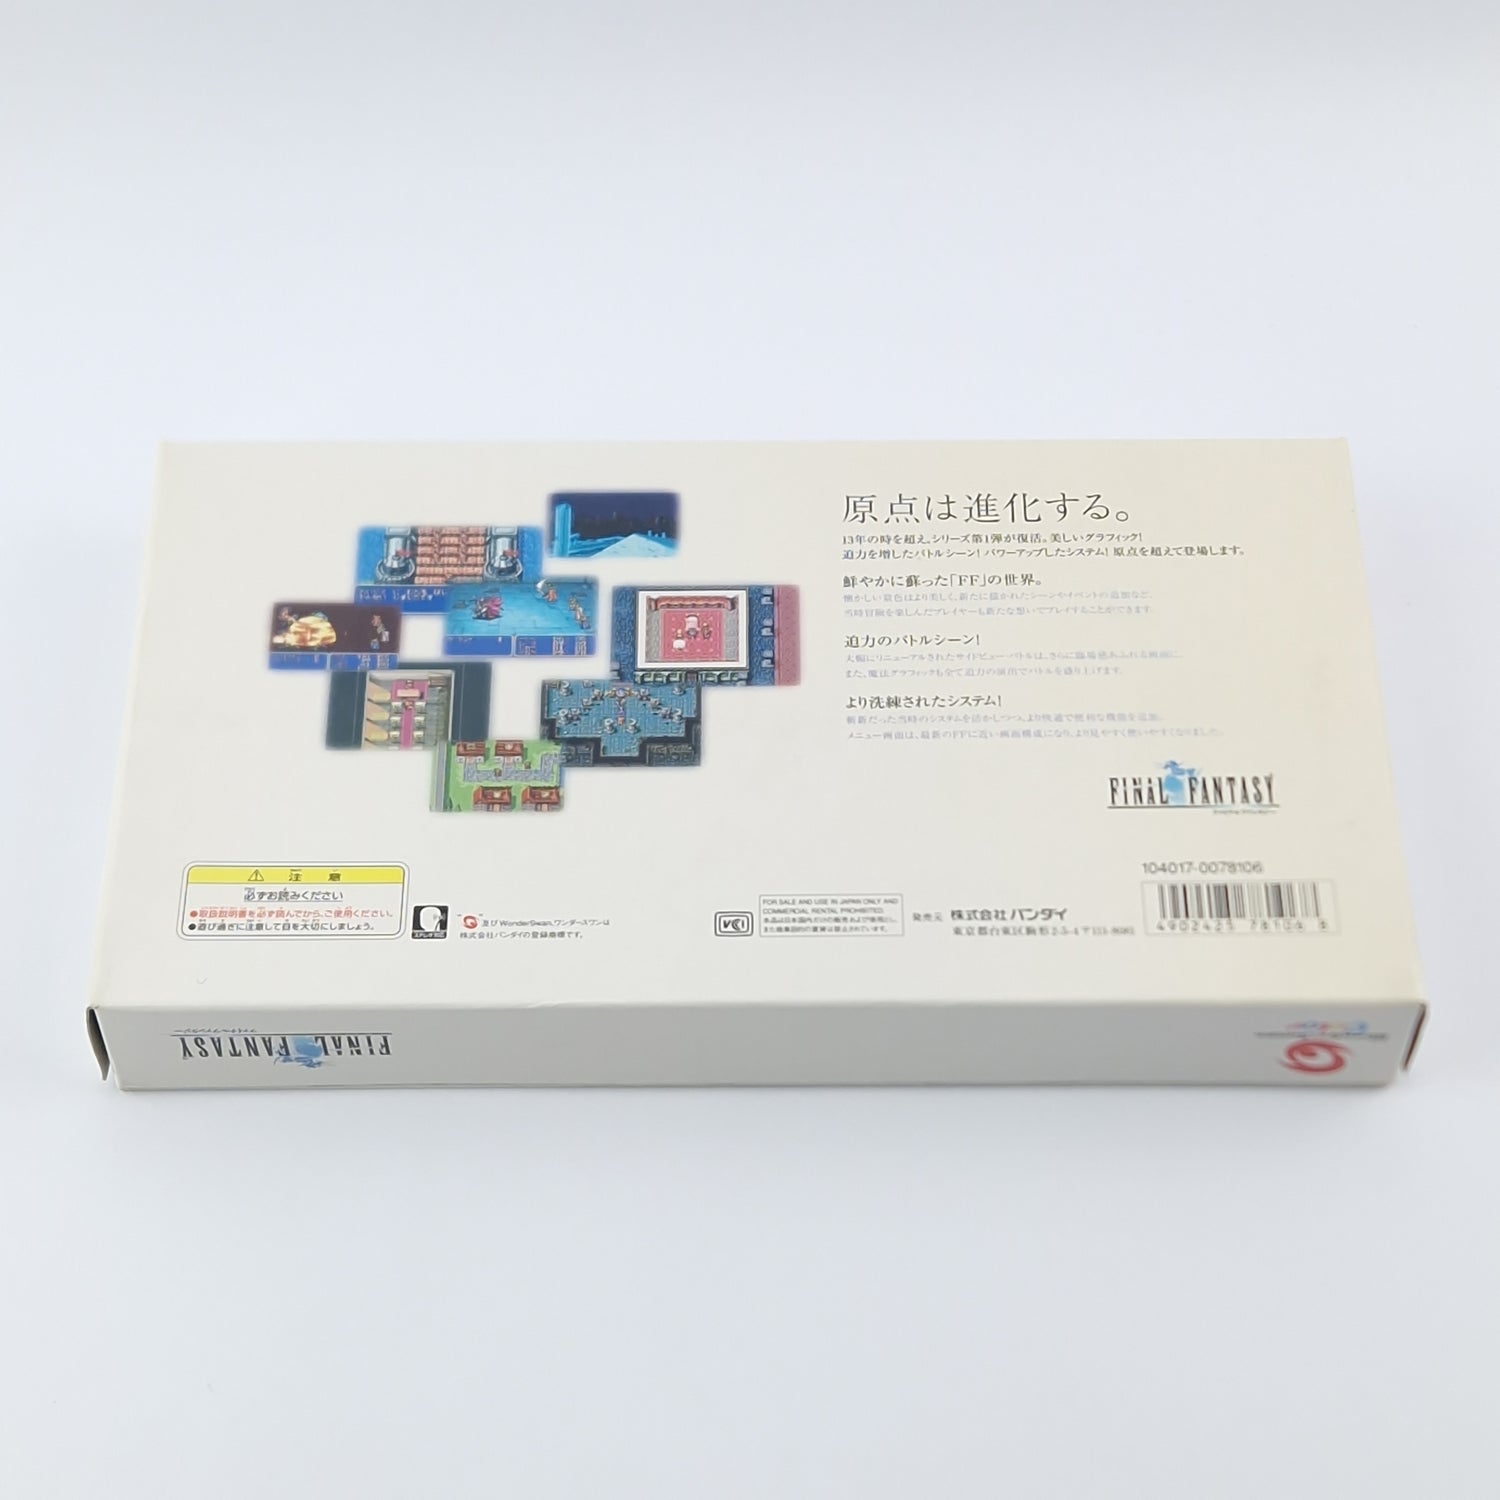 Bandai Wonderswan Color Console: Final Fantasy Limited Edition - OVP JAPAN